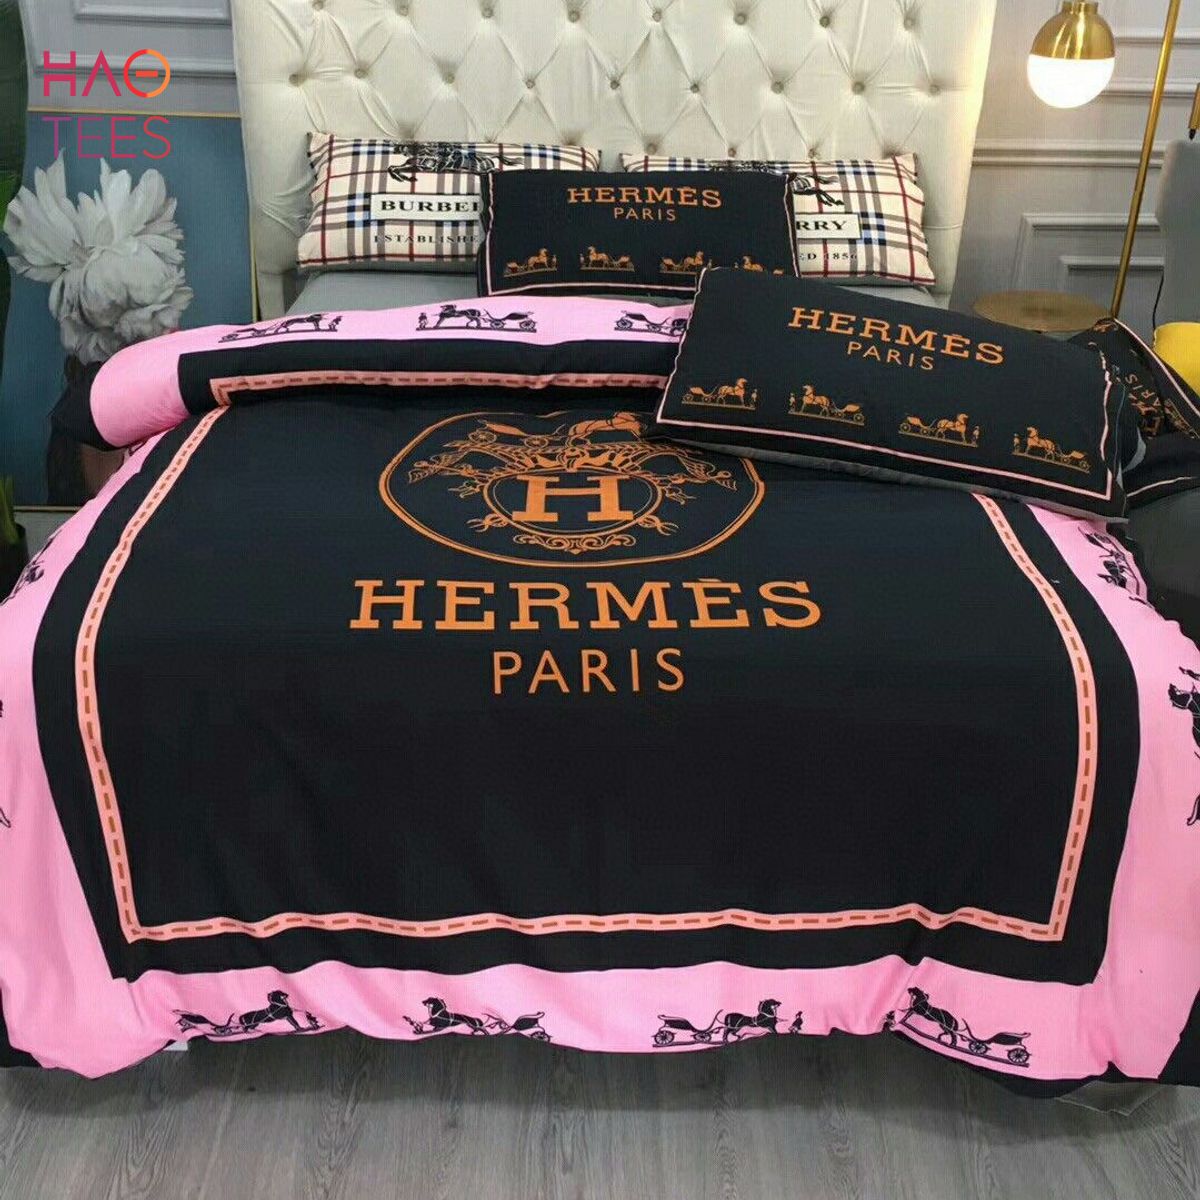 HOT 2022 Hermes Paris Luxury Brand Bedding Sets And Bedroom Sets